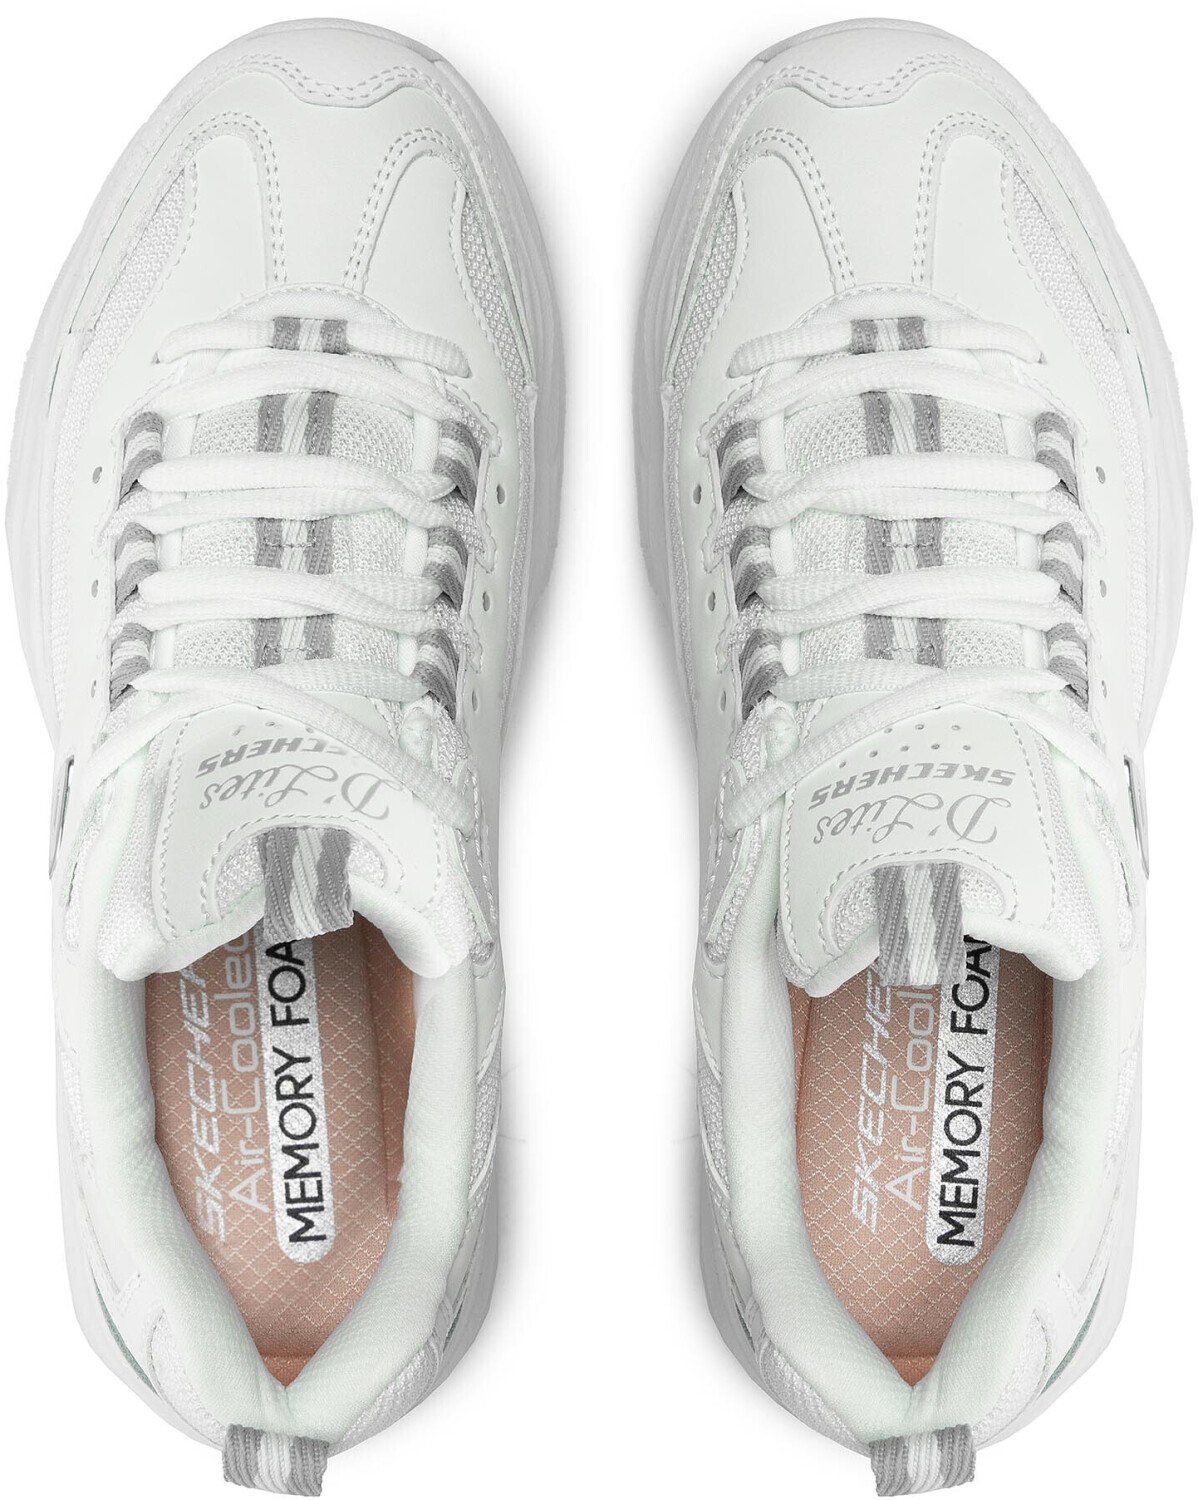 Skechers Sapatos de couro D'Lites 4.0 - Fresh Diva branco